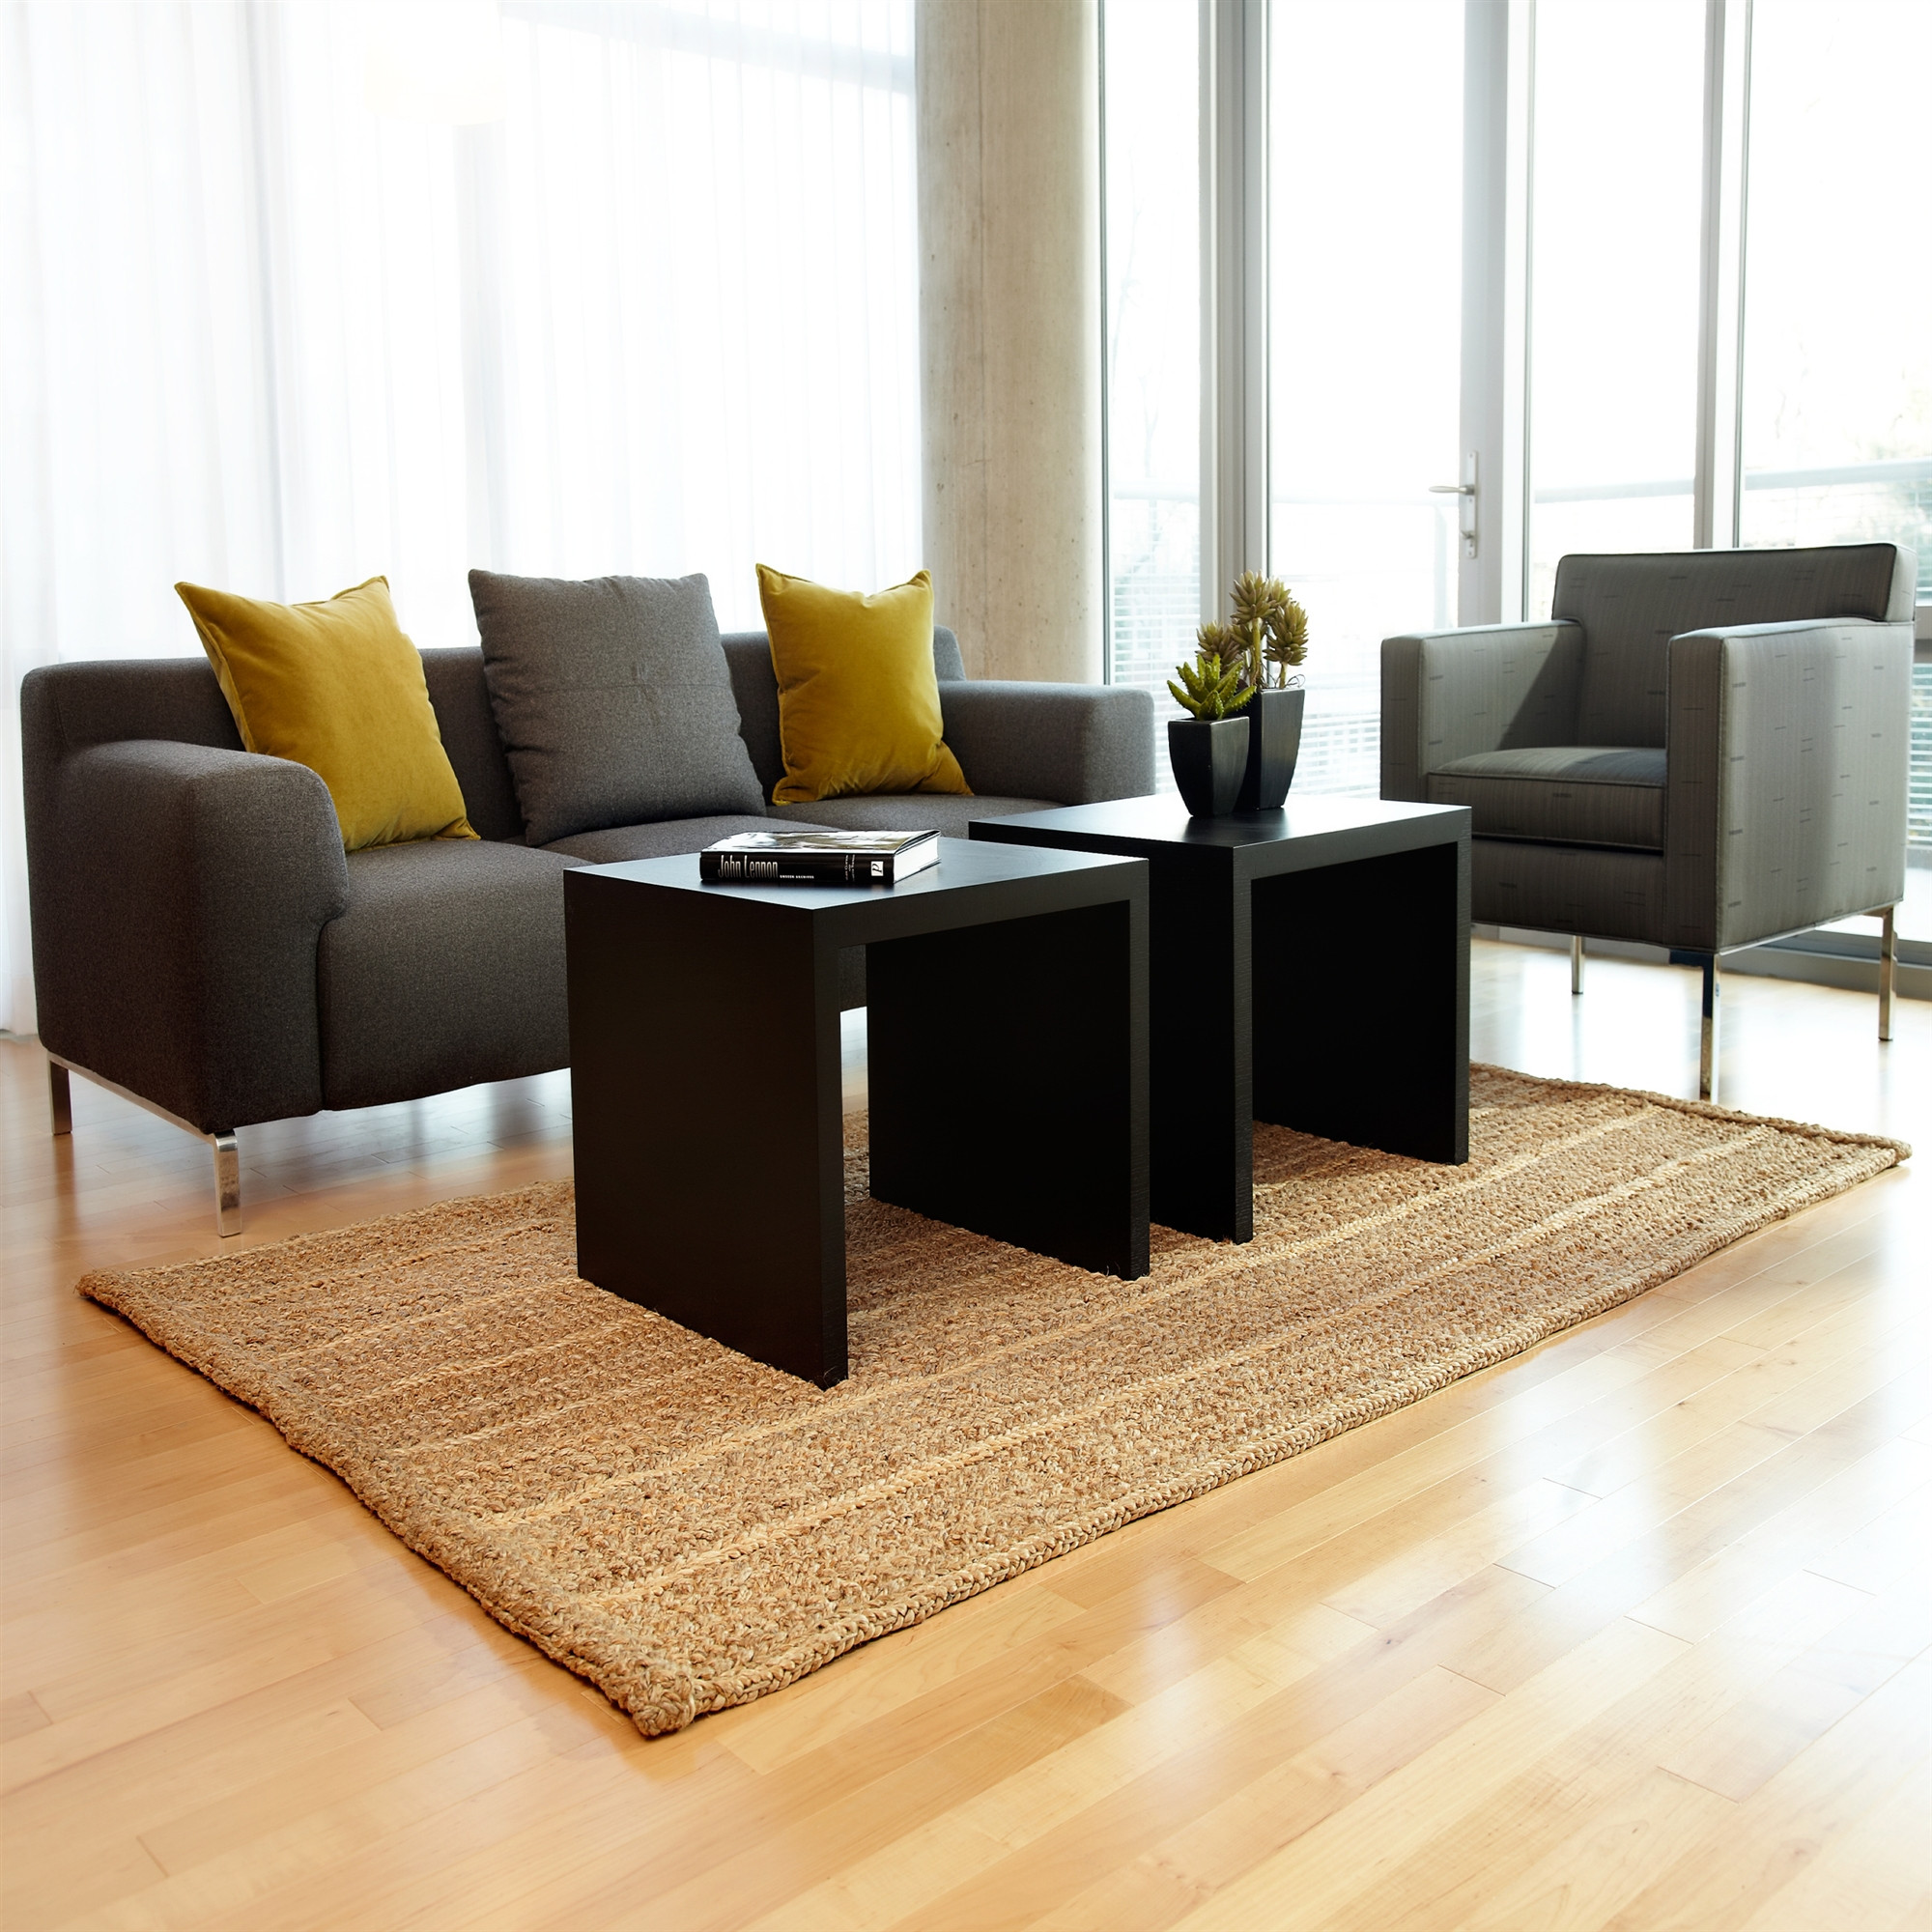 Jute Rug Living Room
 Sisal Rugs Ikea Natural Beauty and Benefits – HomesFeed